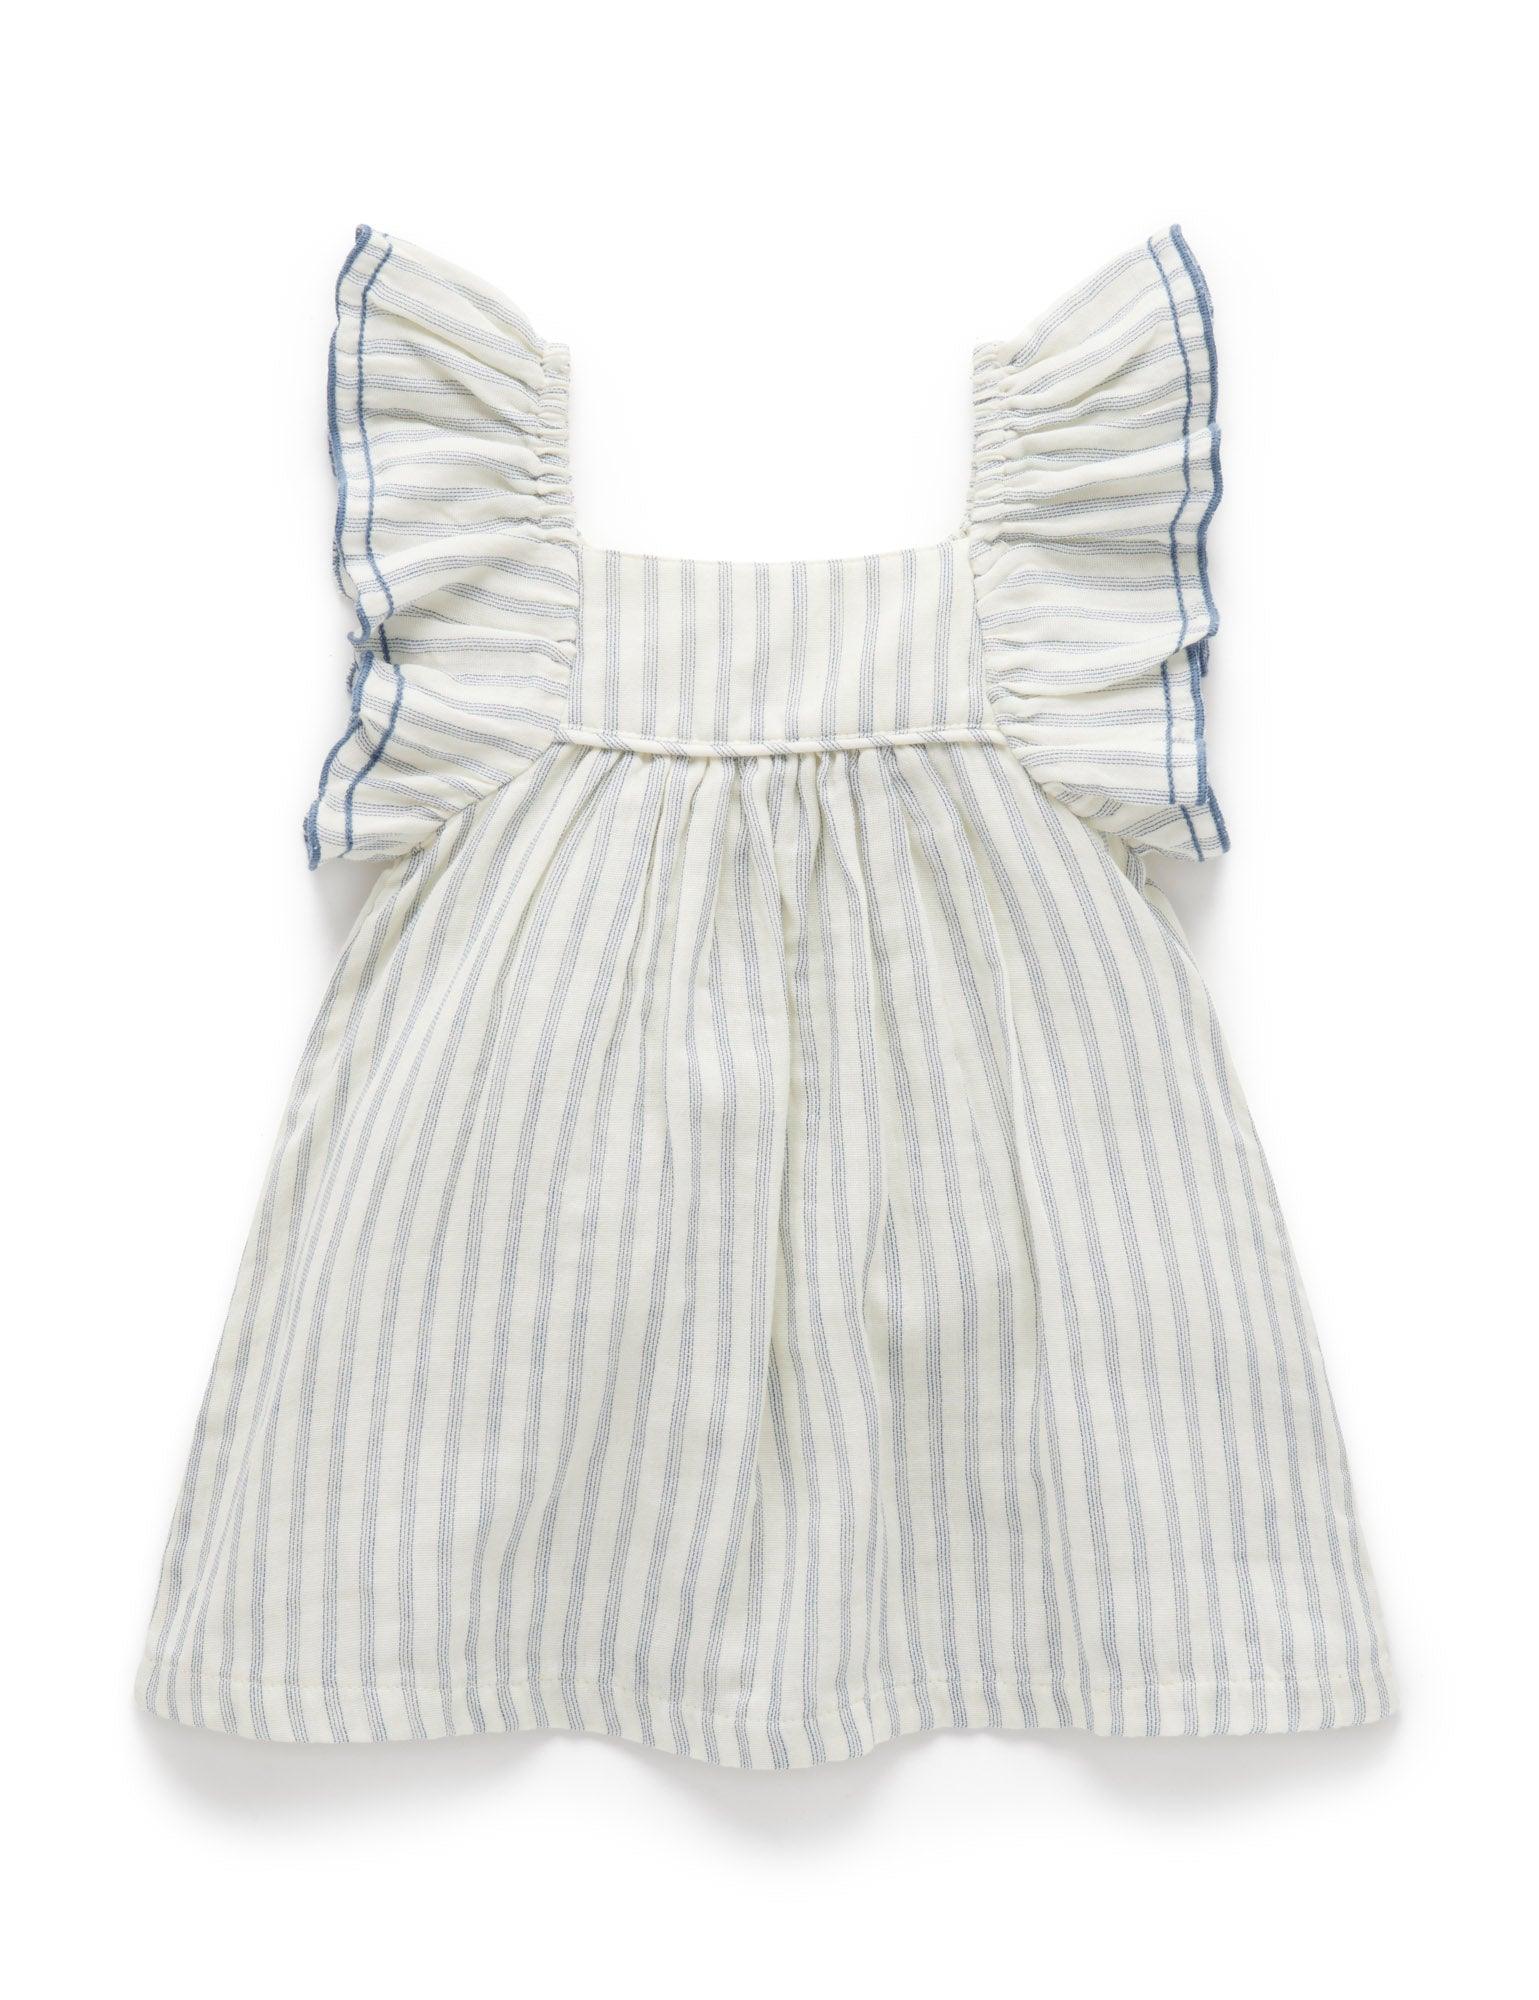 Ruffle Dress -  Fine Stripe - Baby & Toddler Dresses - Purebaby